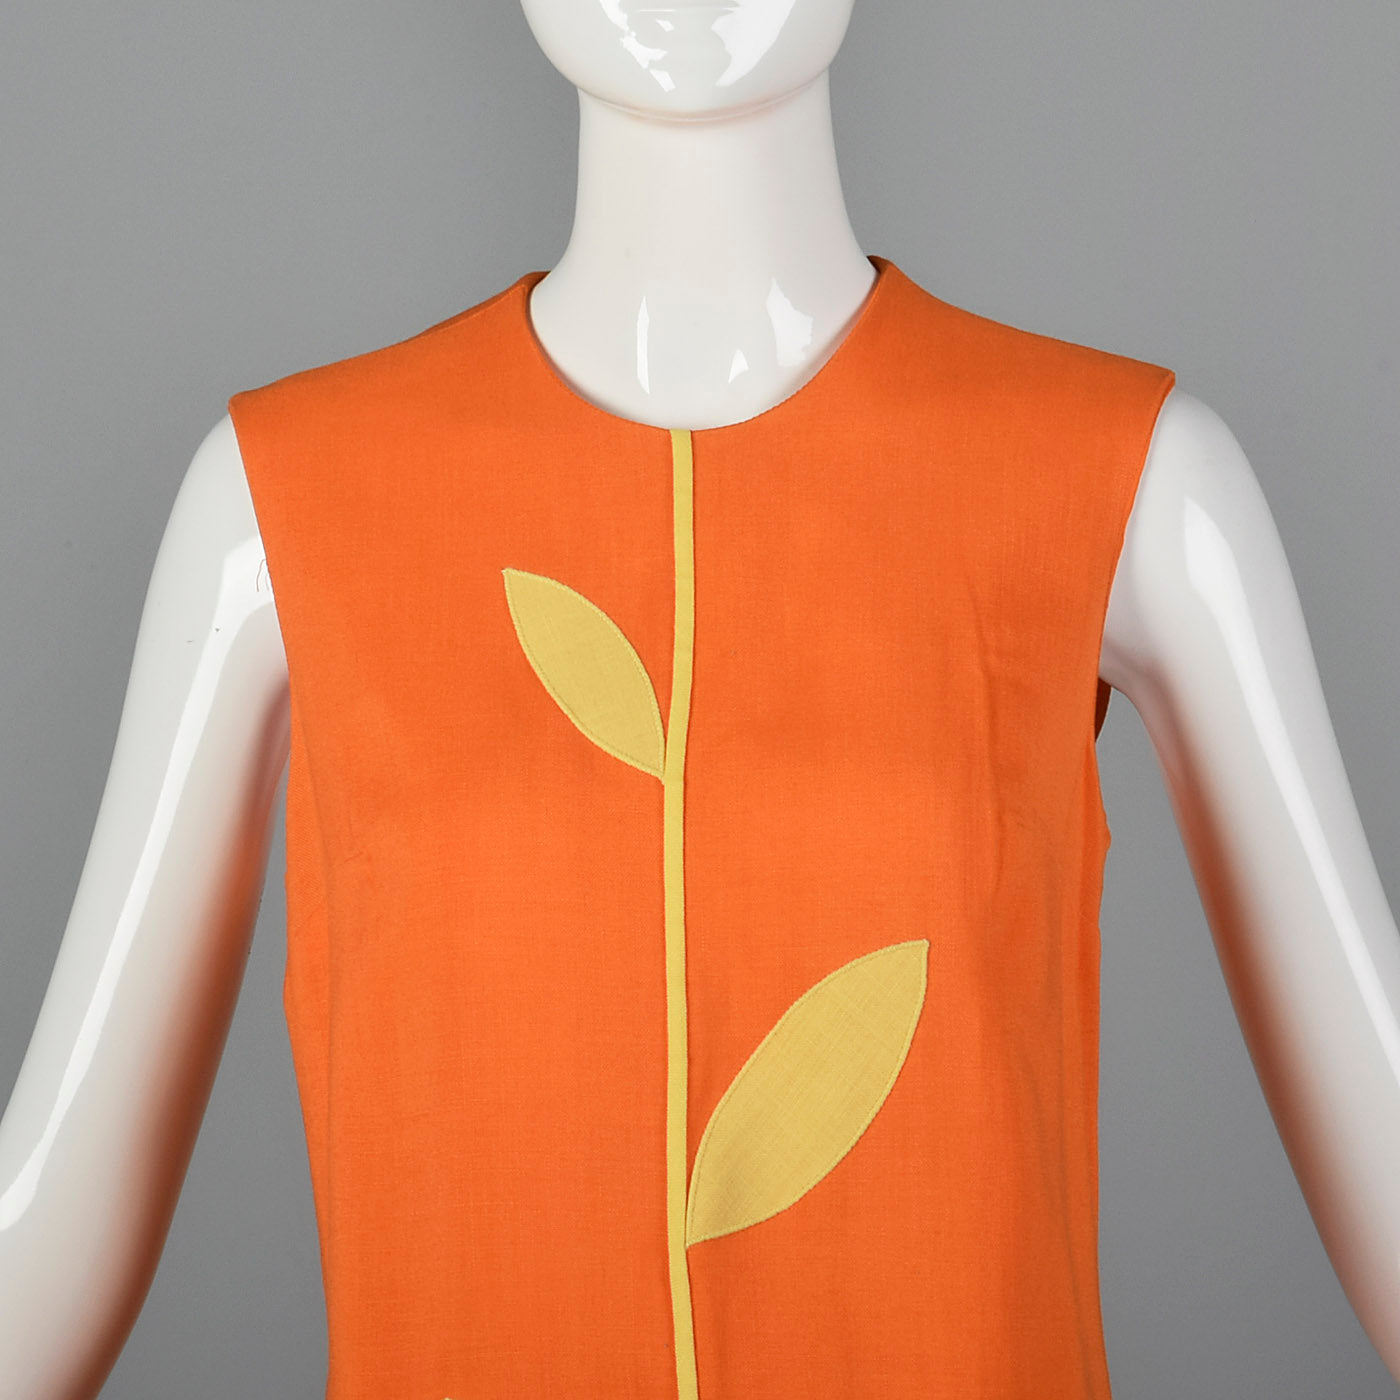 1960s Deadstock Mod Dress with 3D Flower Appliques